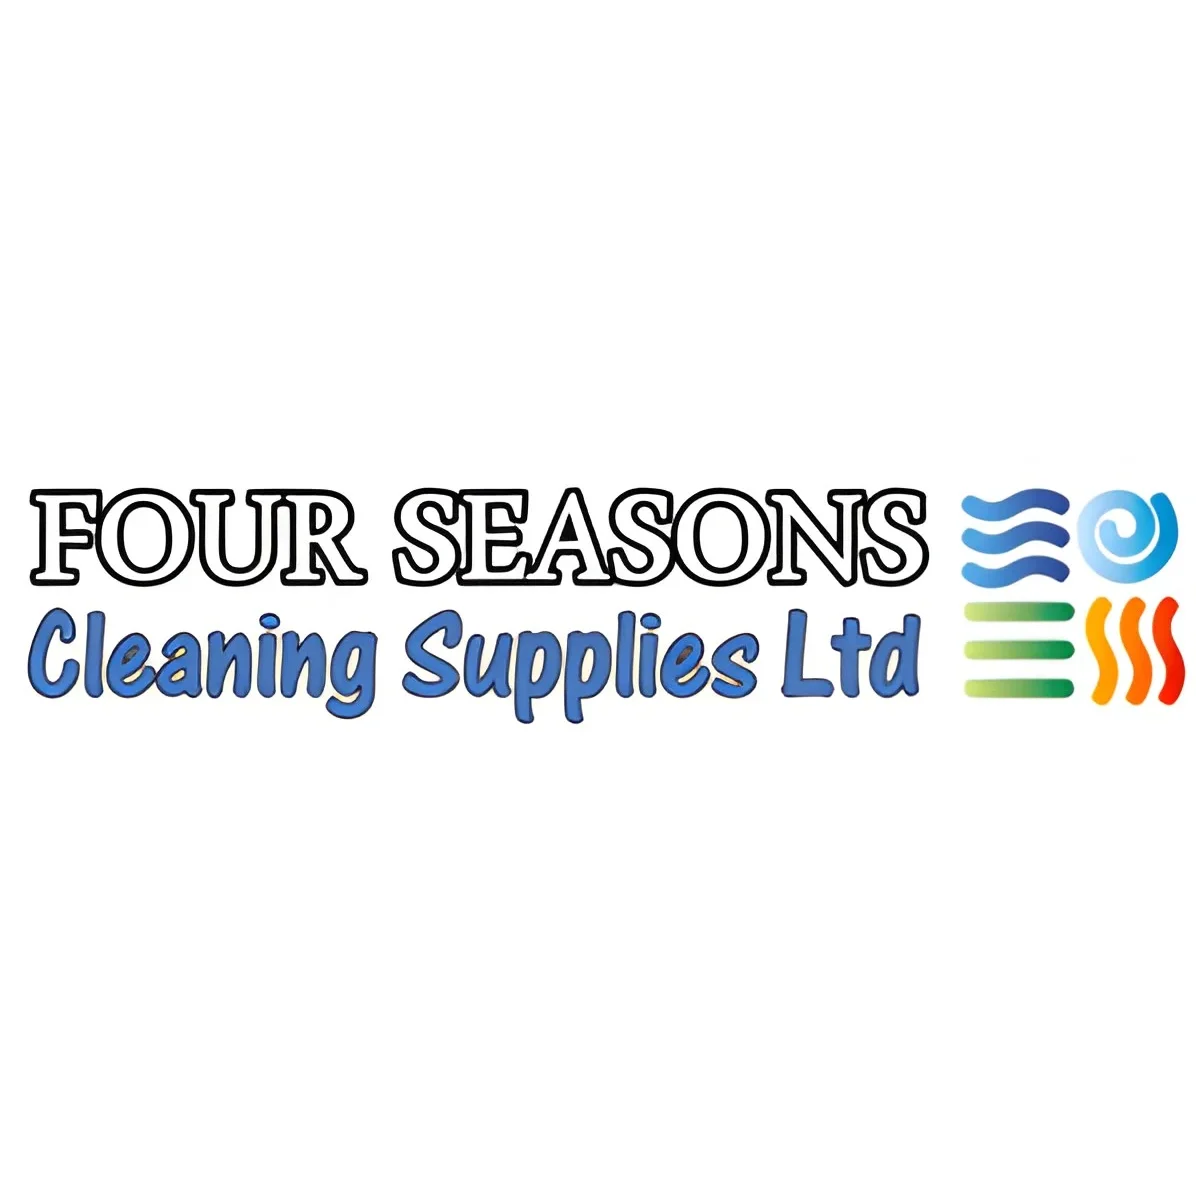 Four Seasons Cleaning Supplies Ltd - Manchester, Lancashire M24 1RU - 01616 547220 | ShowMeLocal.com